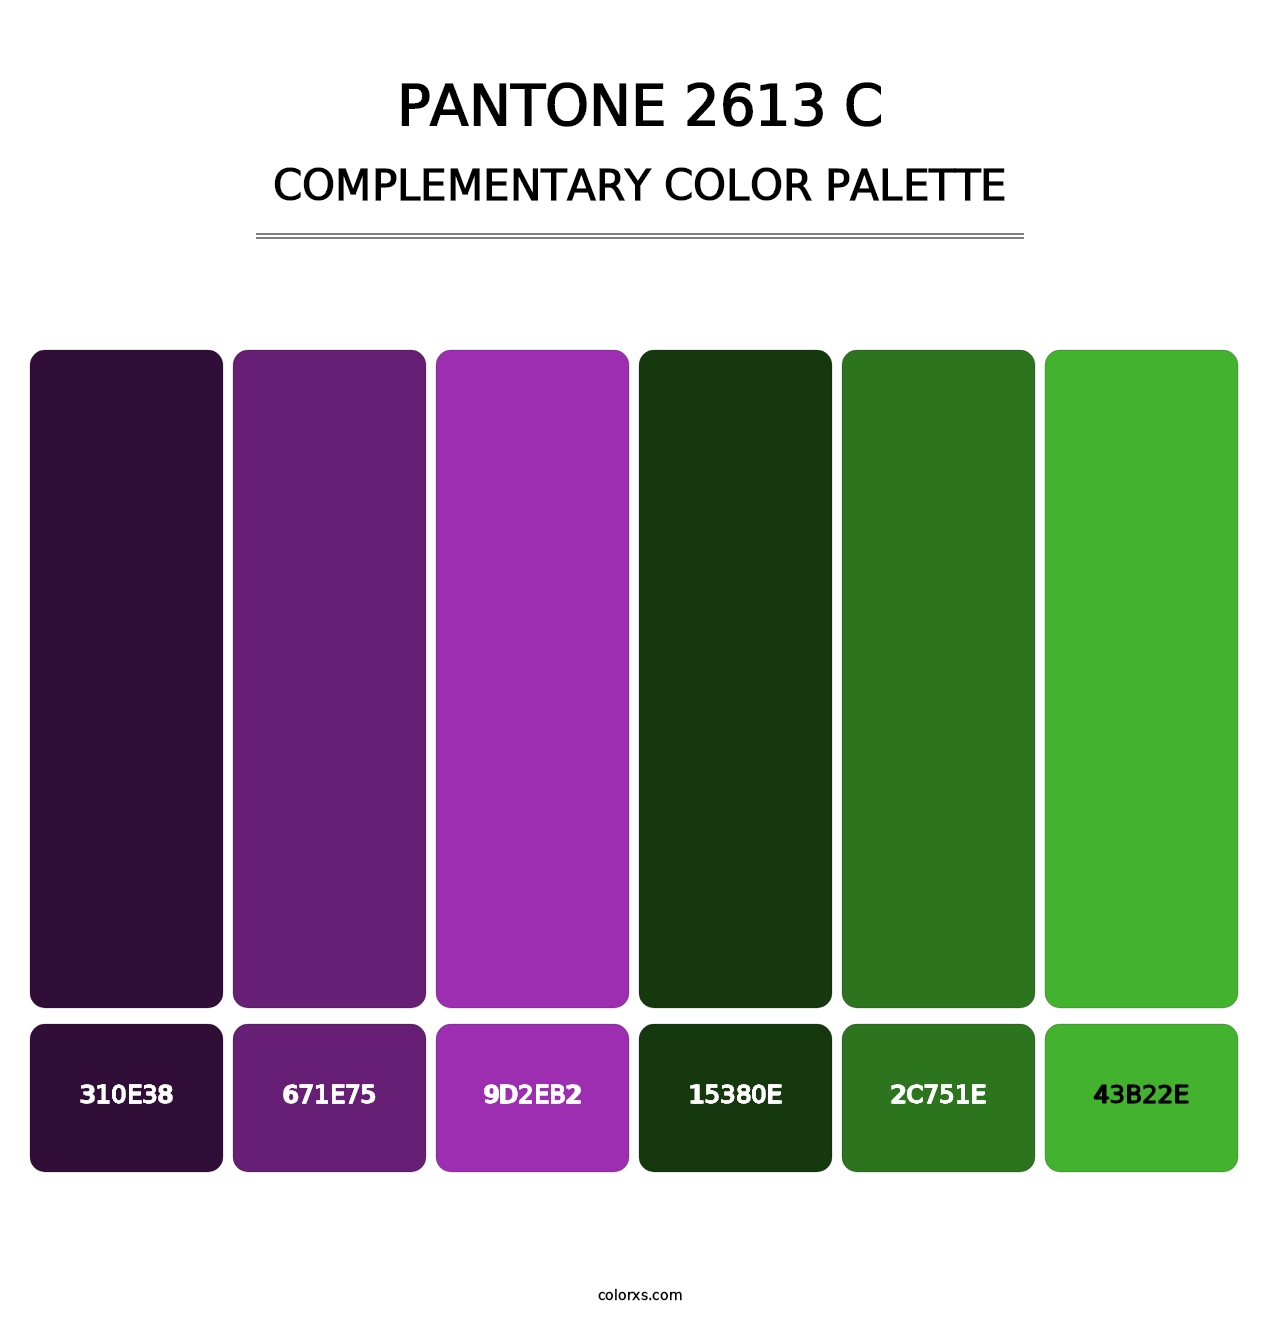 PANTONE 2613 C - Complementary Color Palette